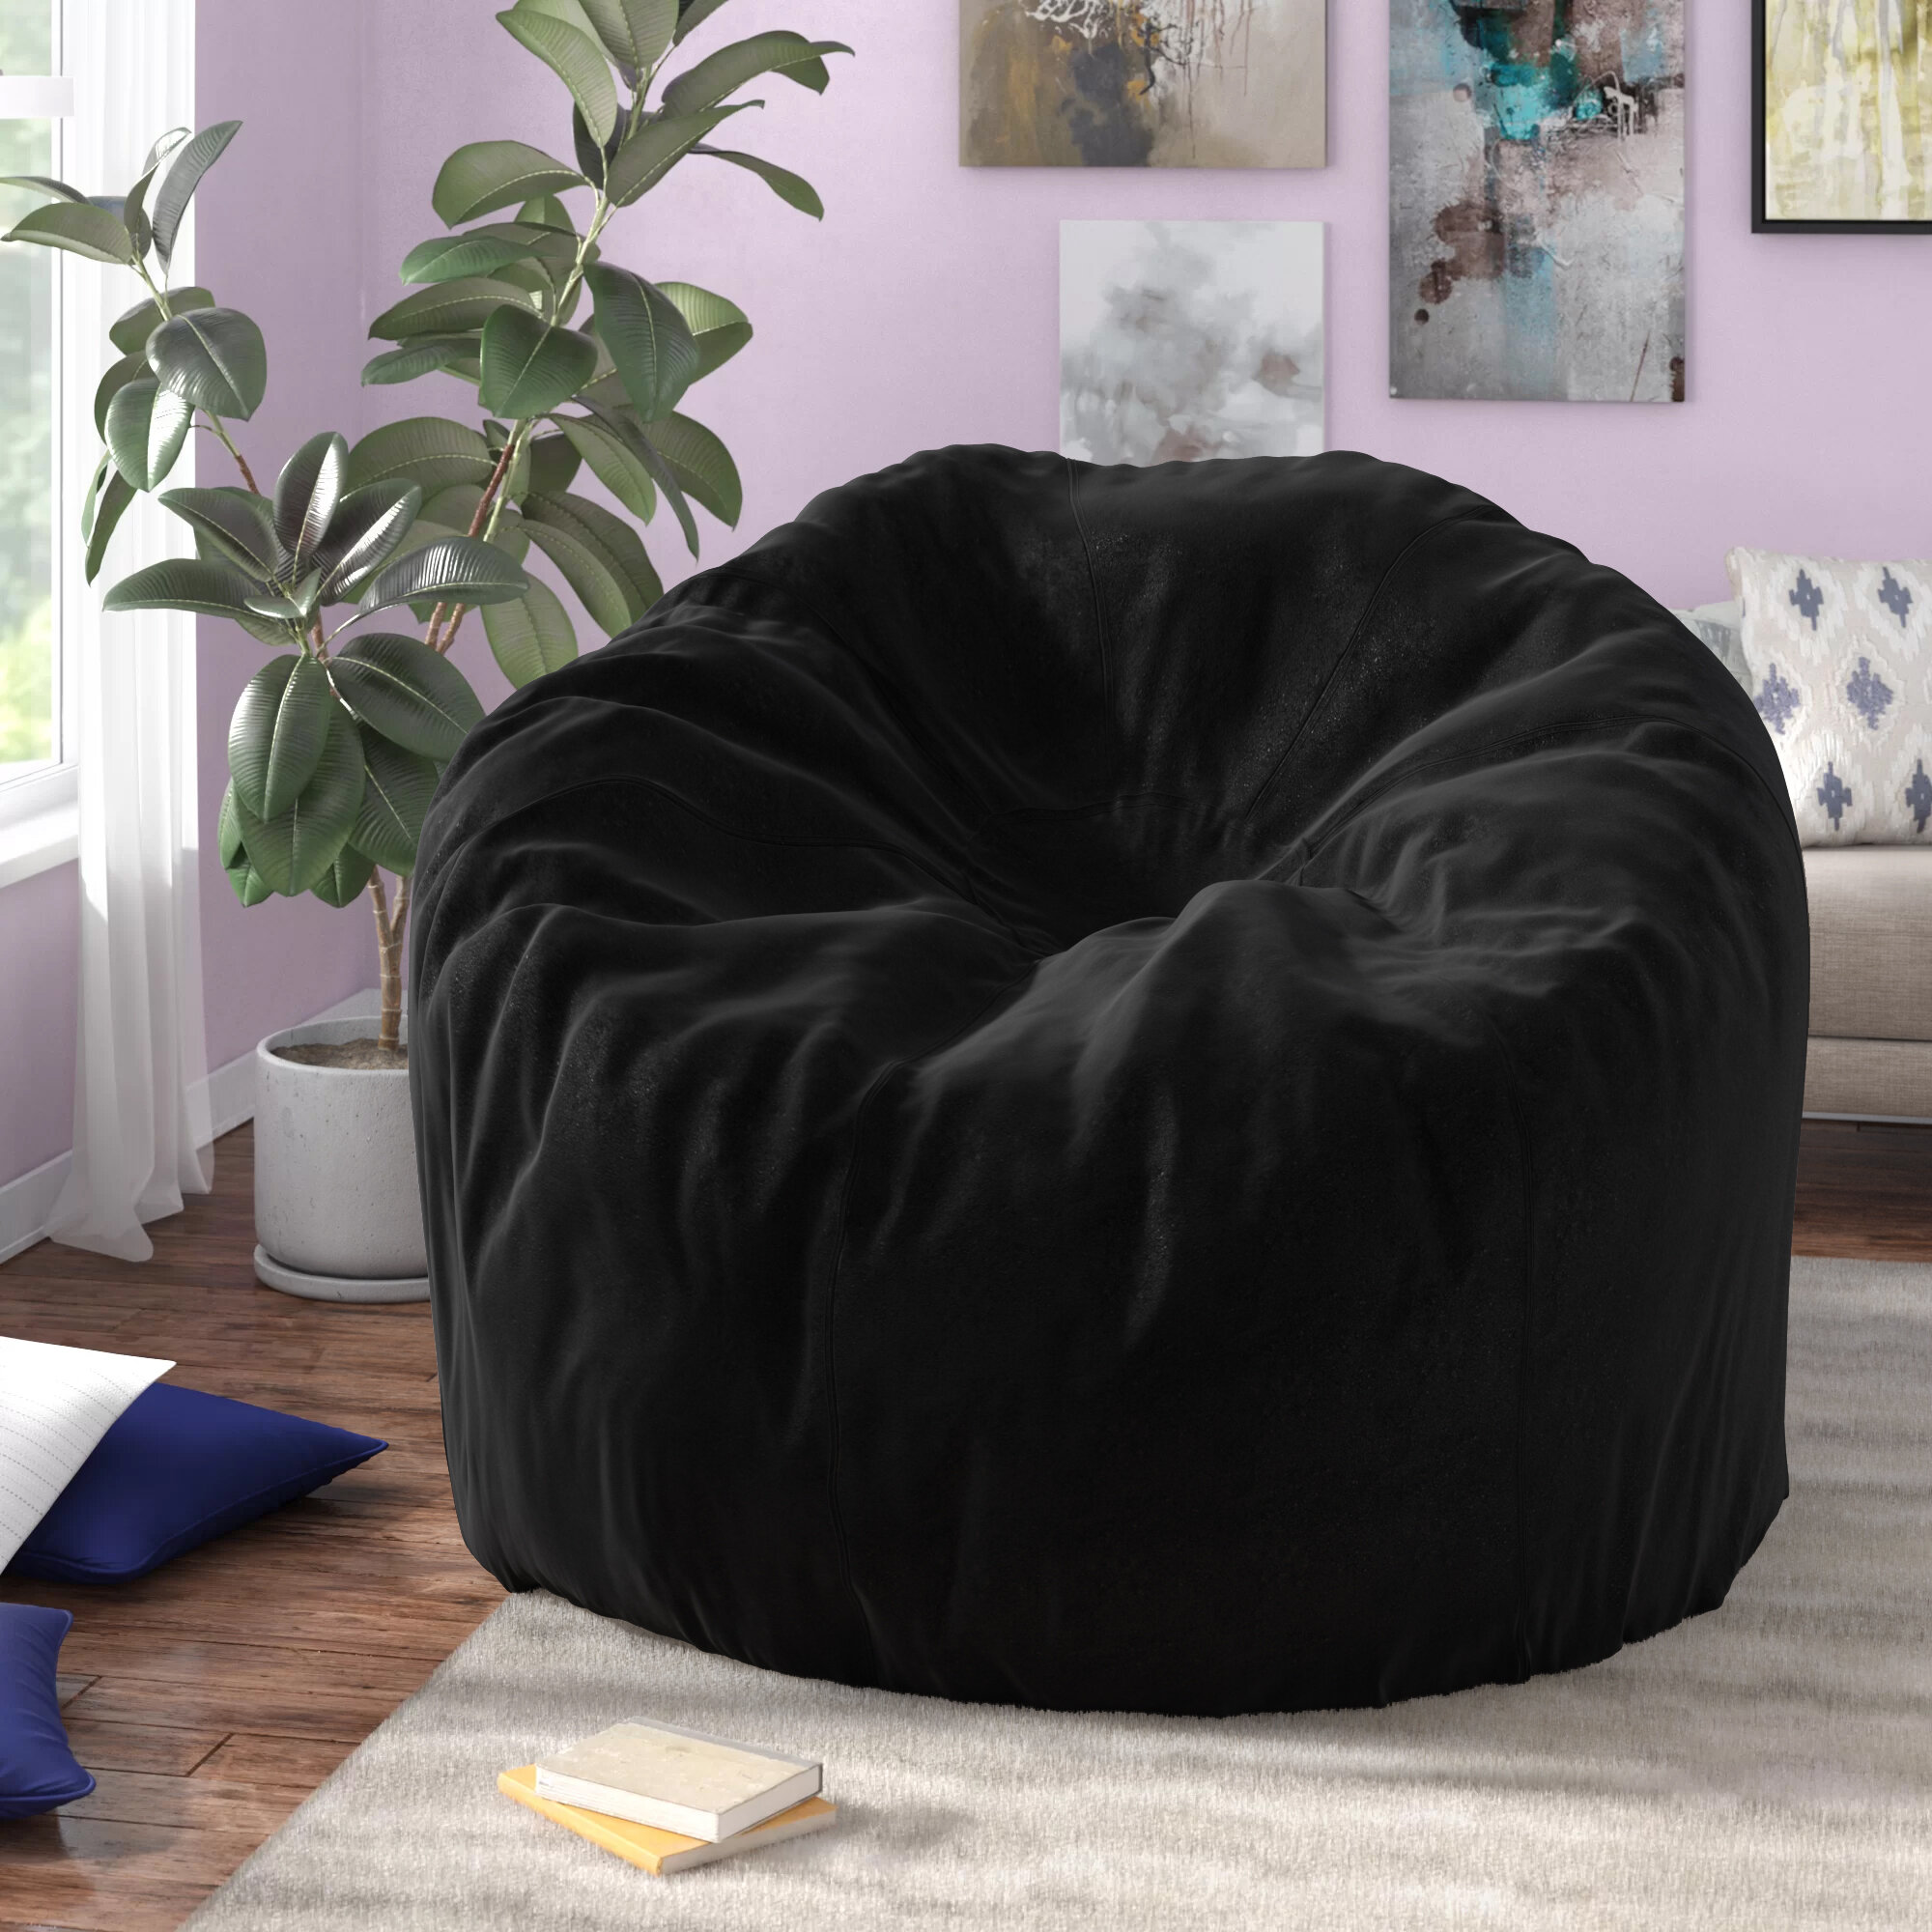 Ebern Designs Large Bean Bag Chair Lounger Reviews Wayfair